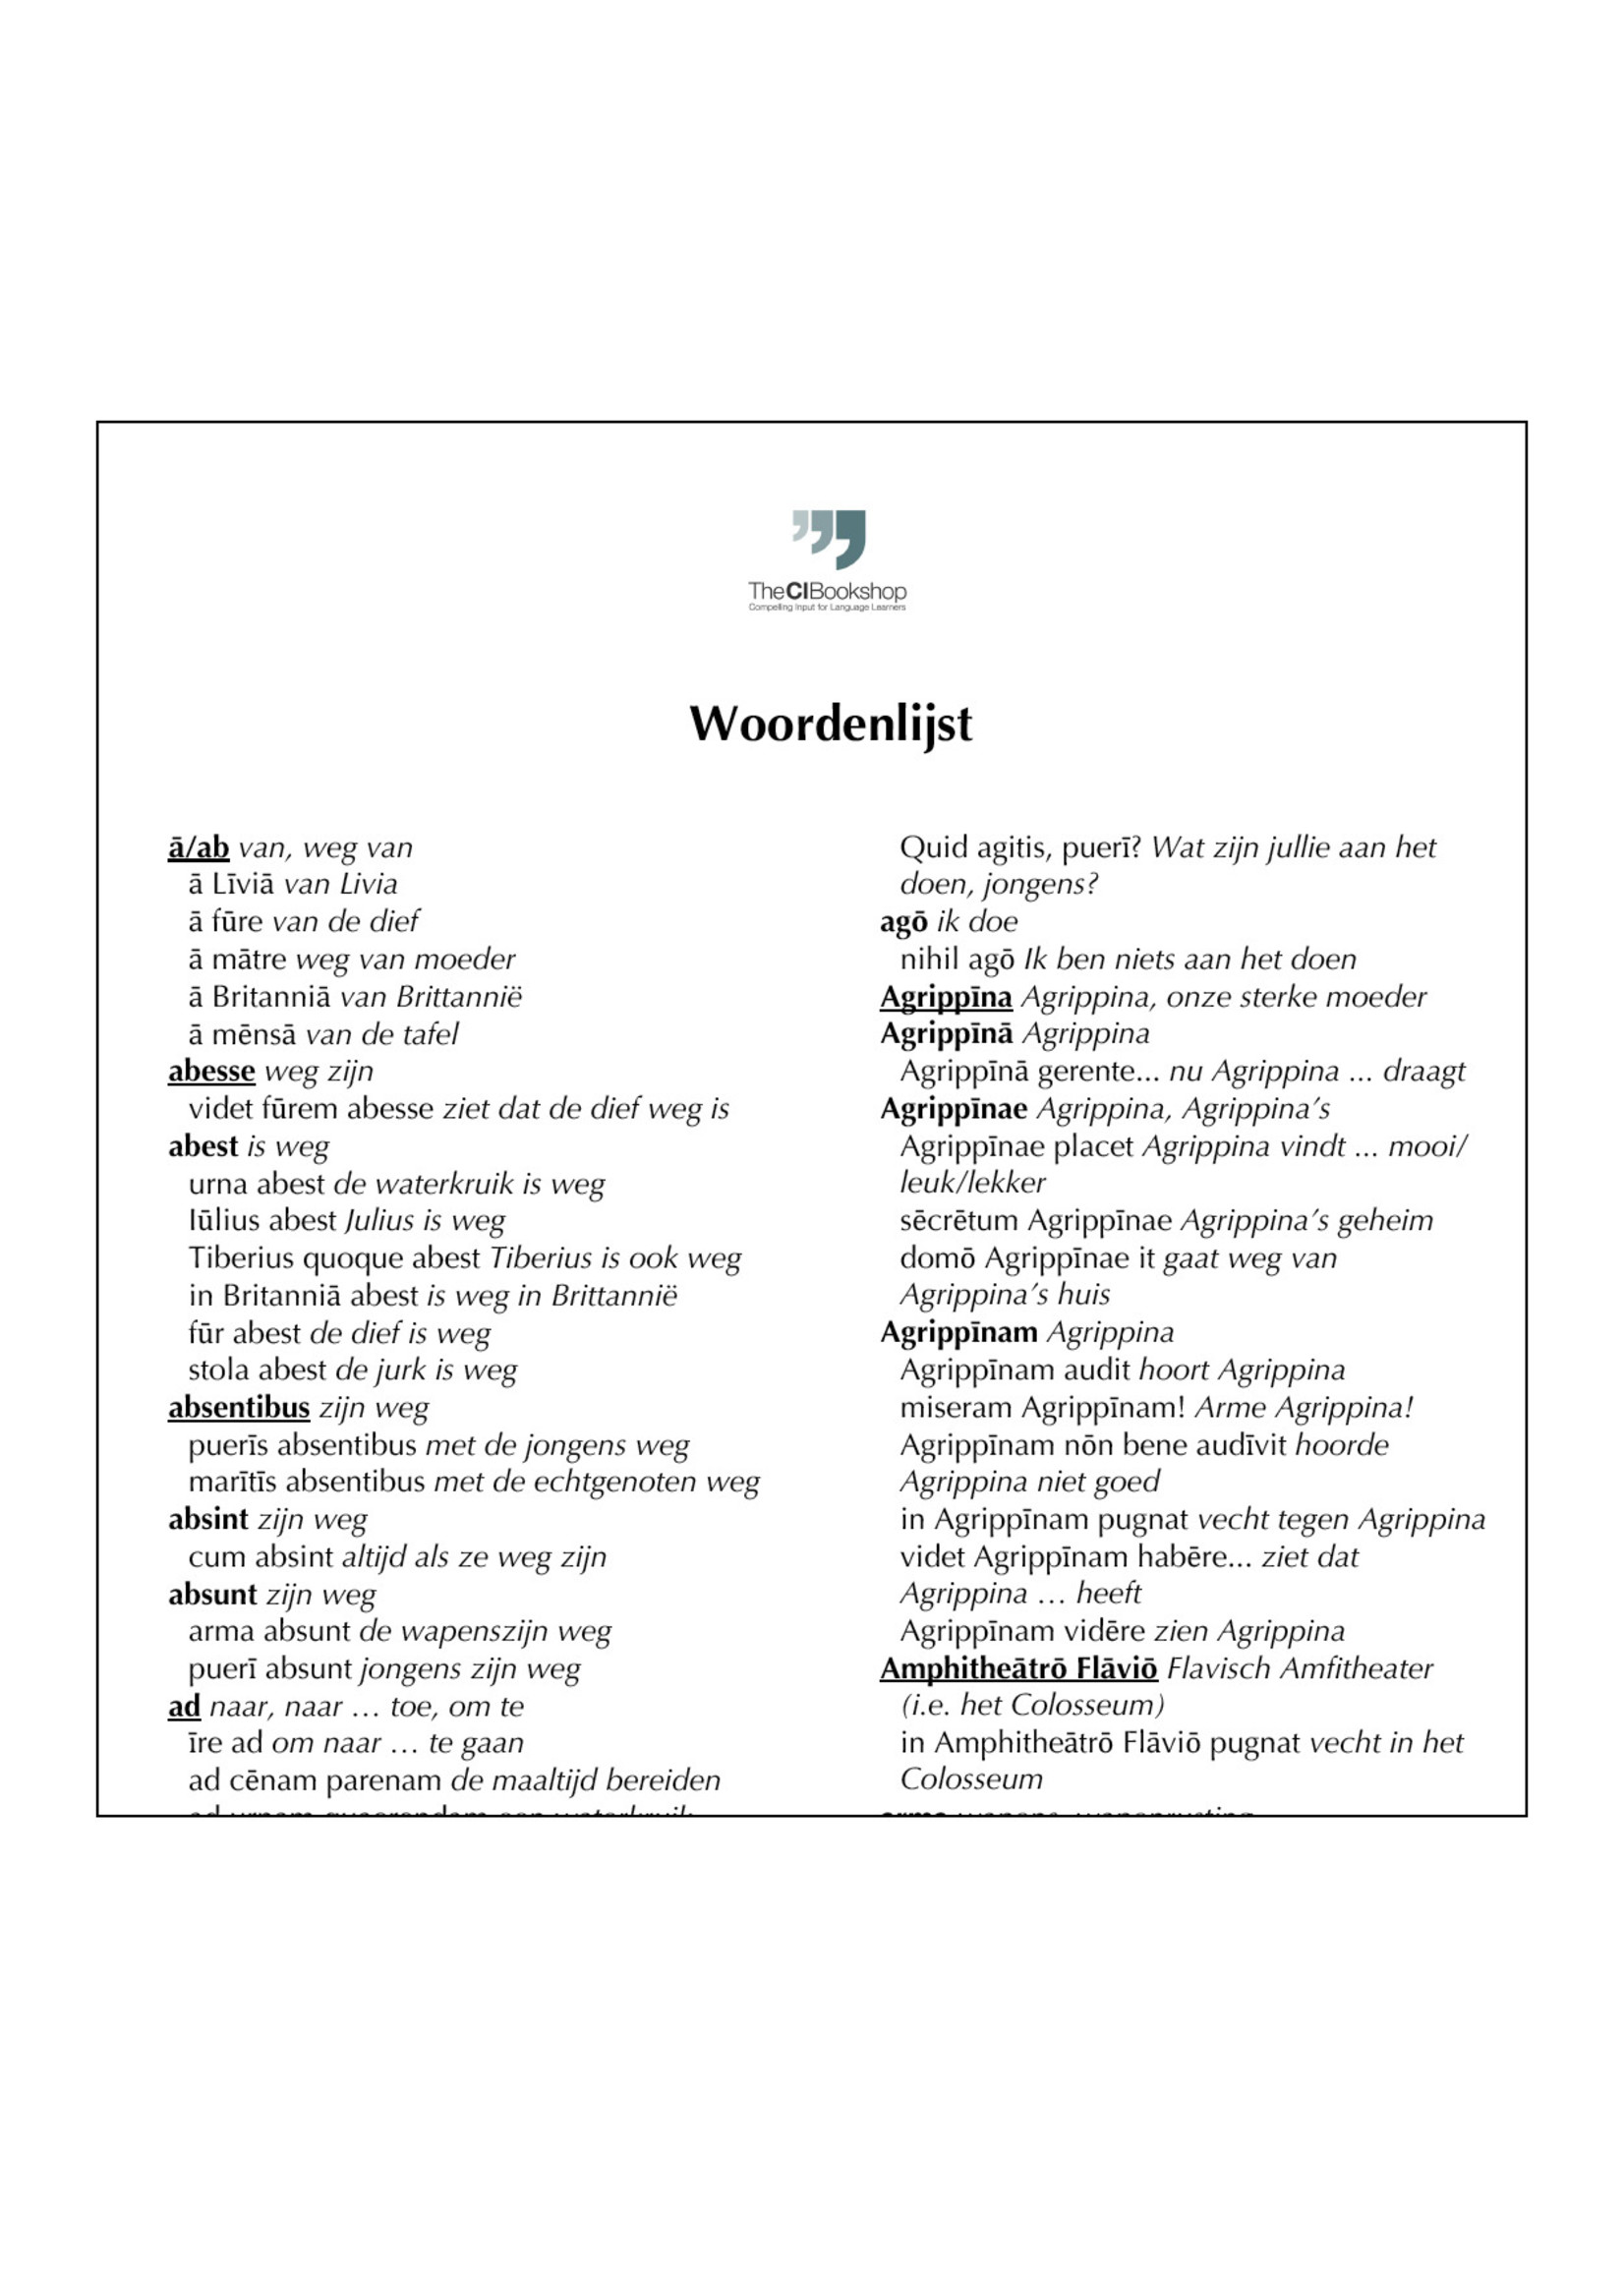 Dutch glossary for Rūfus et Lūcia: līberī lutulentī